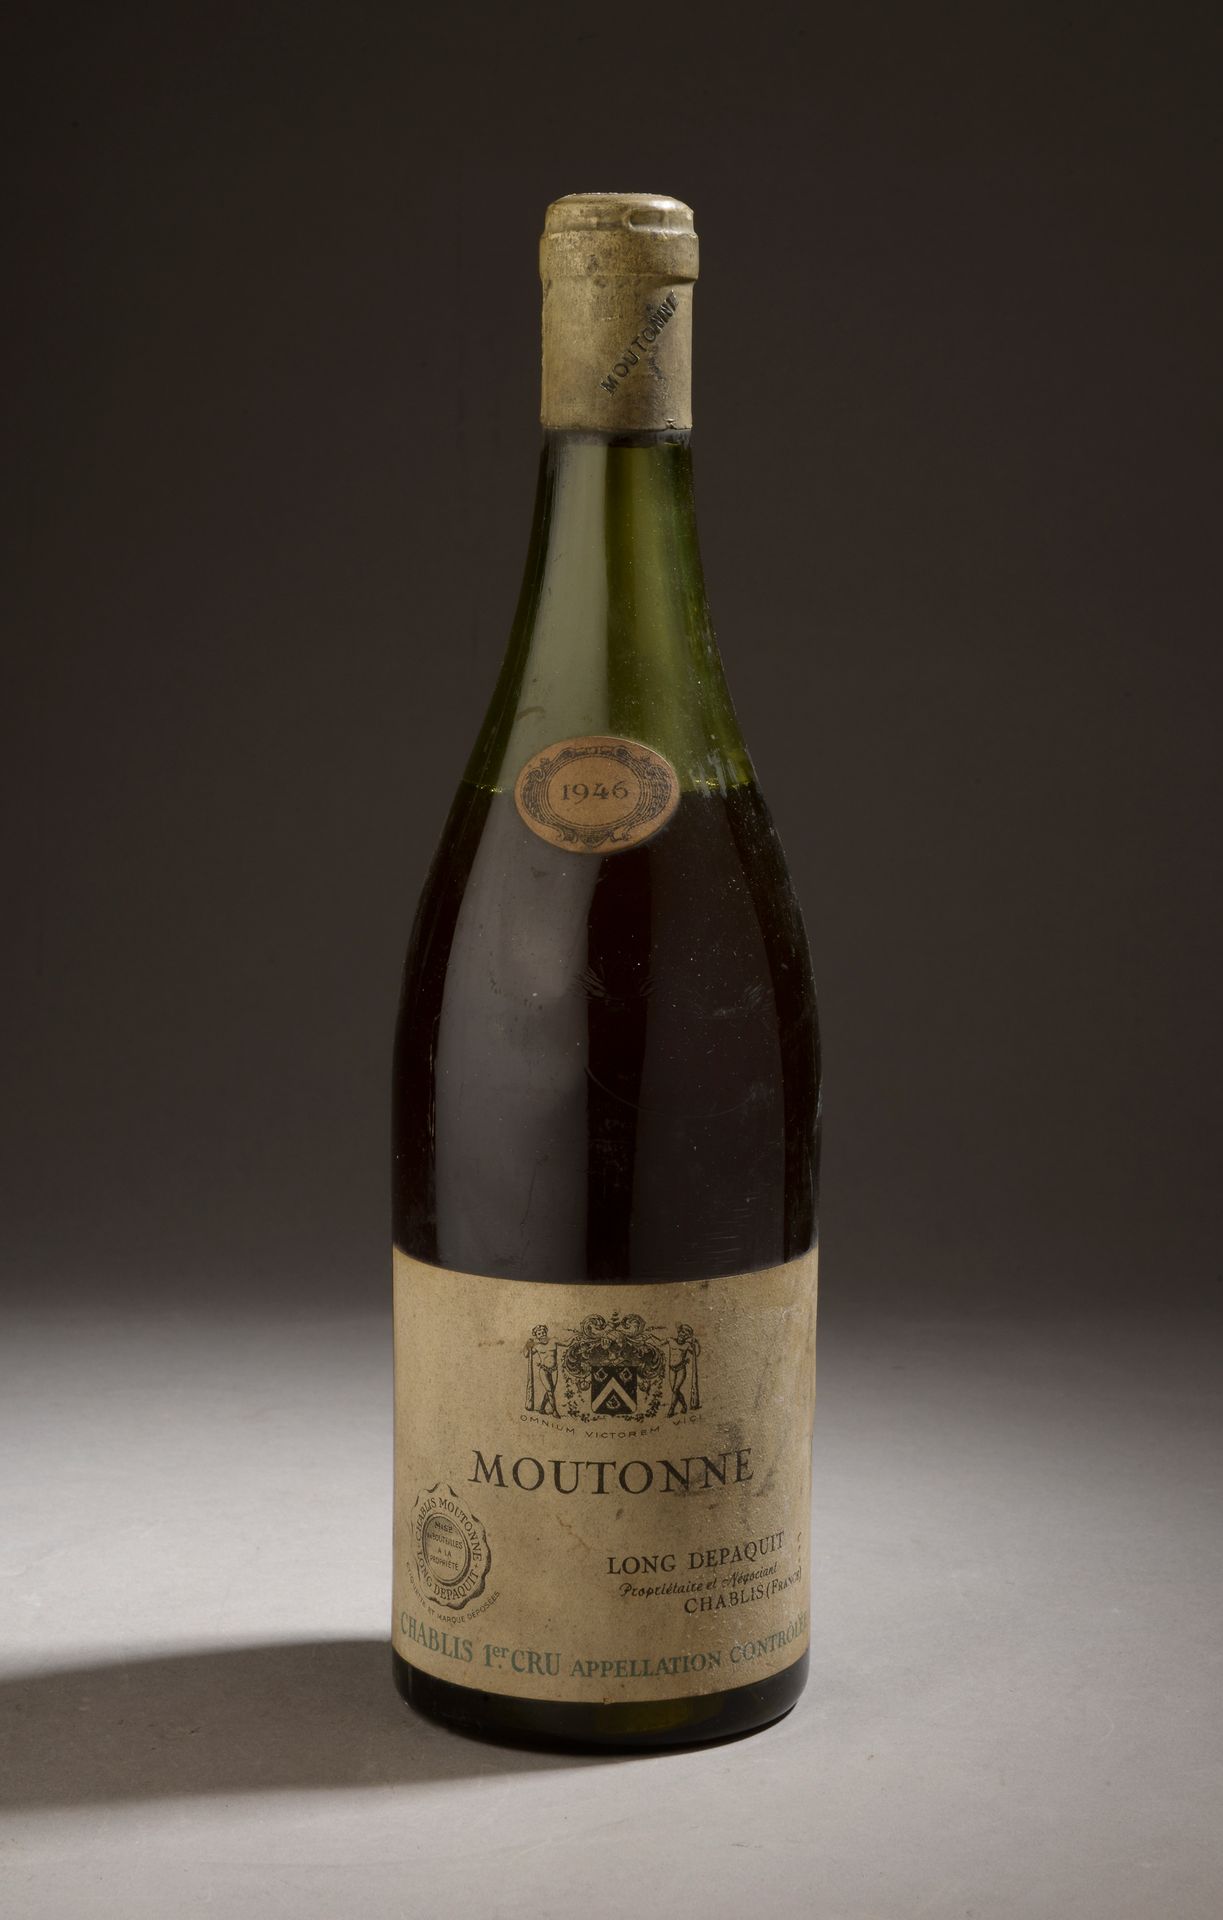 Null 1瓶 CHABLIS "Moutonne 1er cru", Long Depaquit 1946 (和，瓶盖有污点，V)